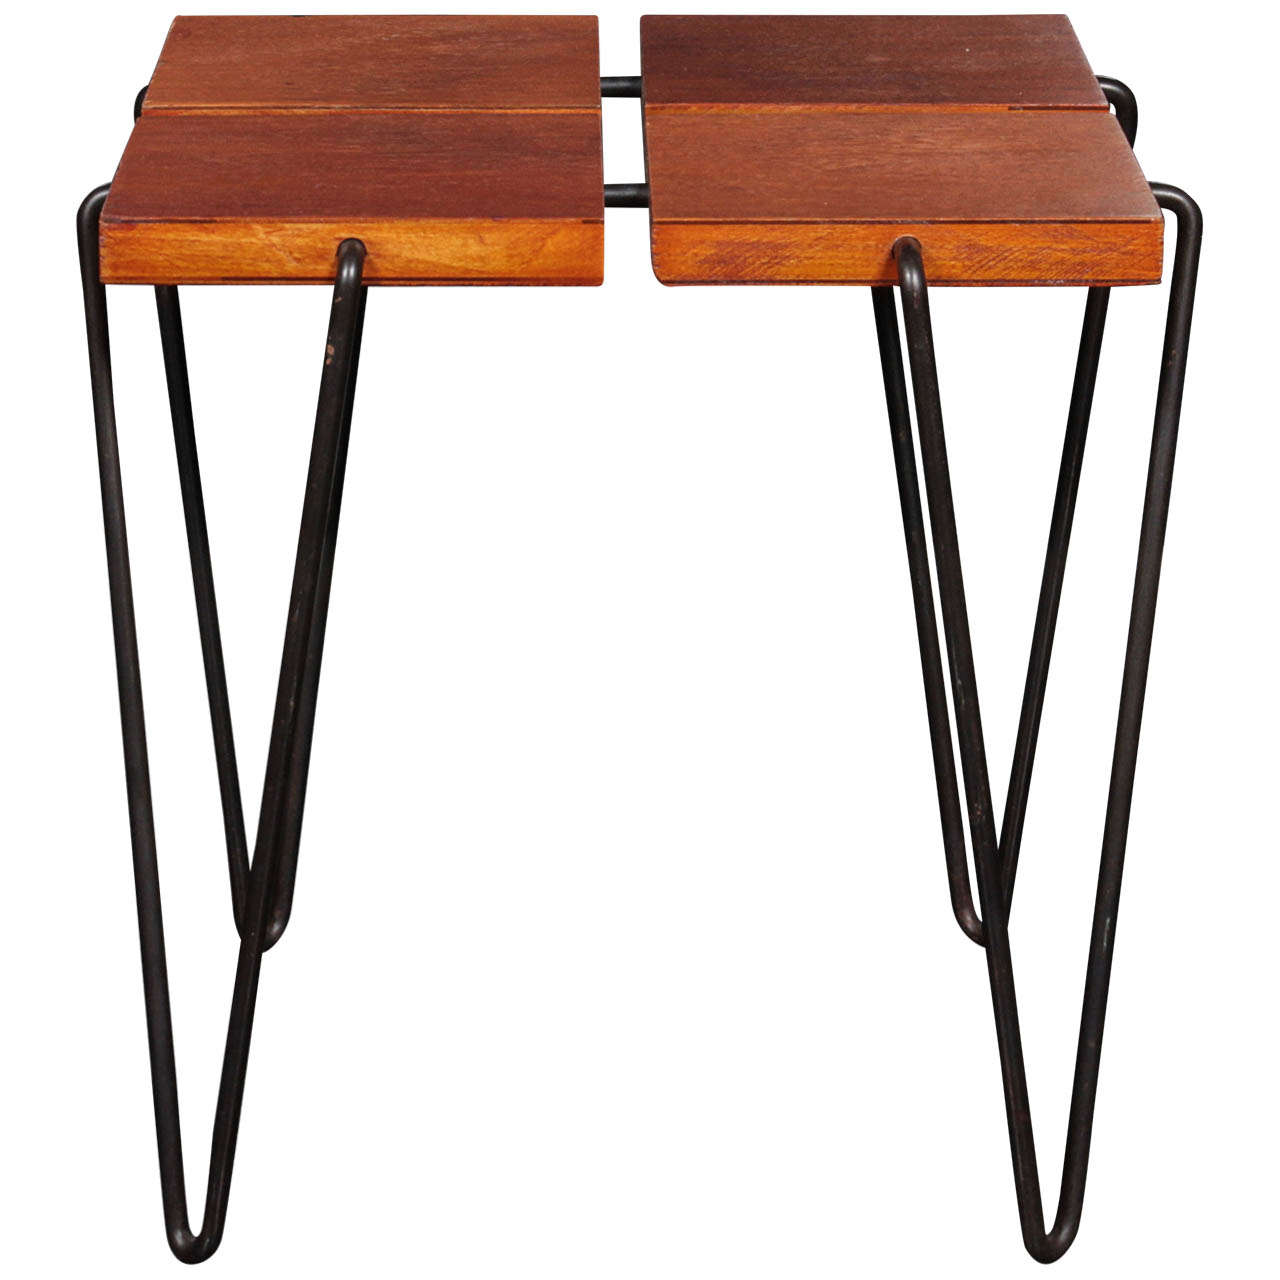 Rare stool/table by Harold Cohen & Davis Pratt, circa 1951